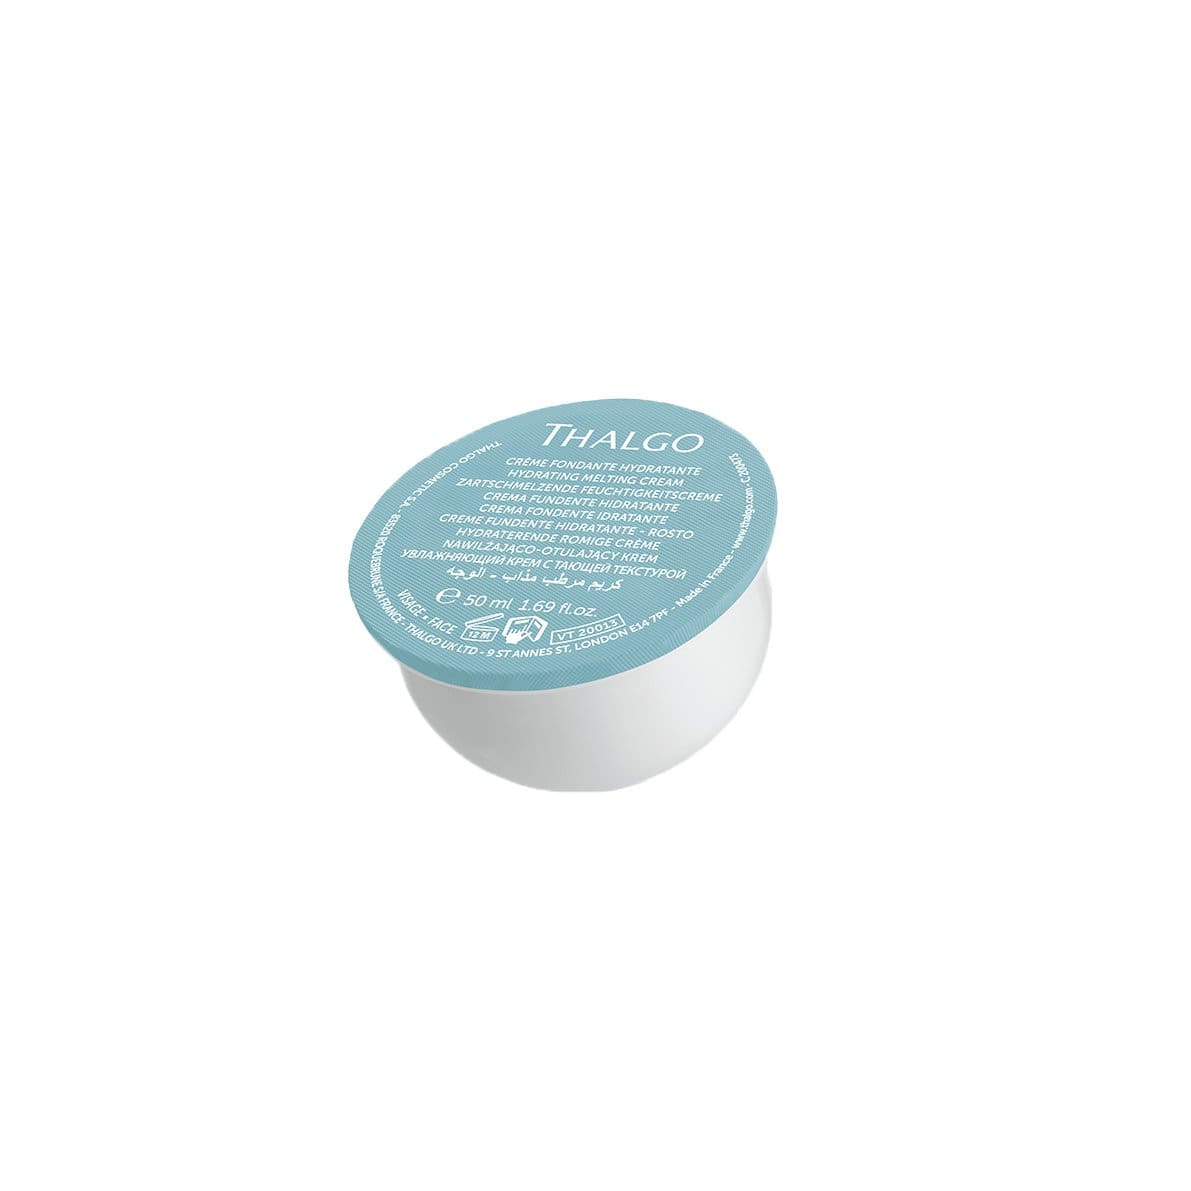 Thalgo Source Marine Hydrating Melting Cream 50ml